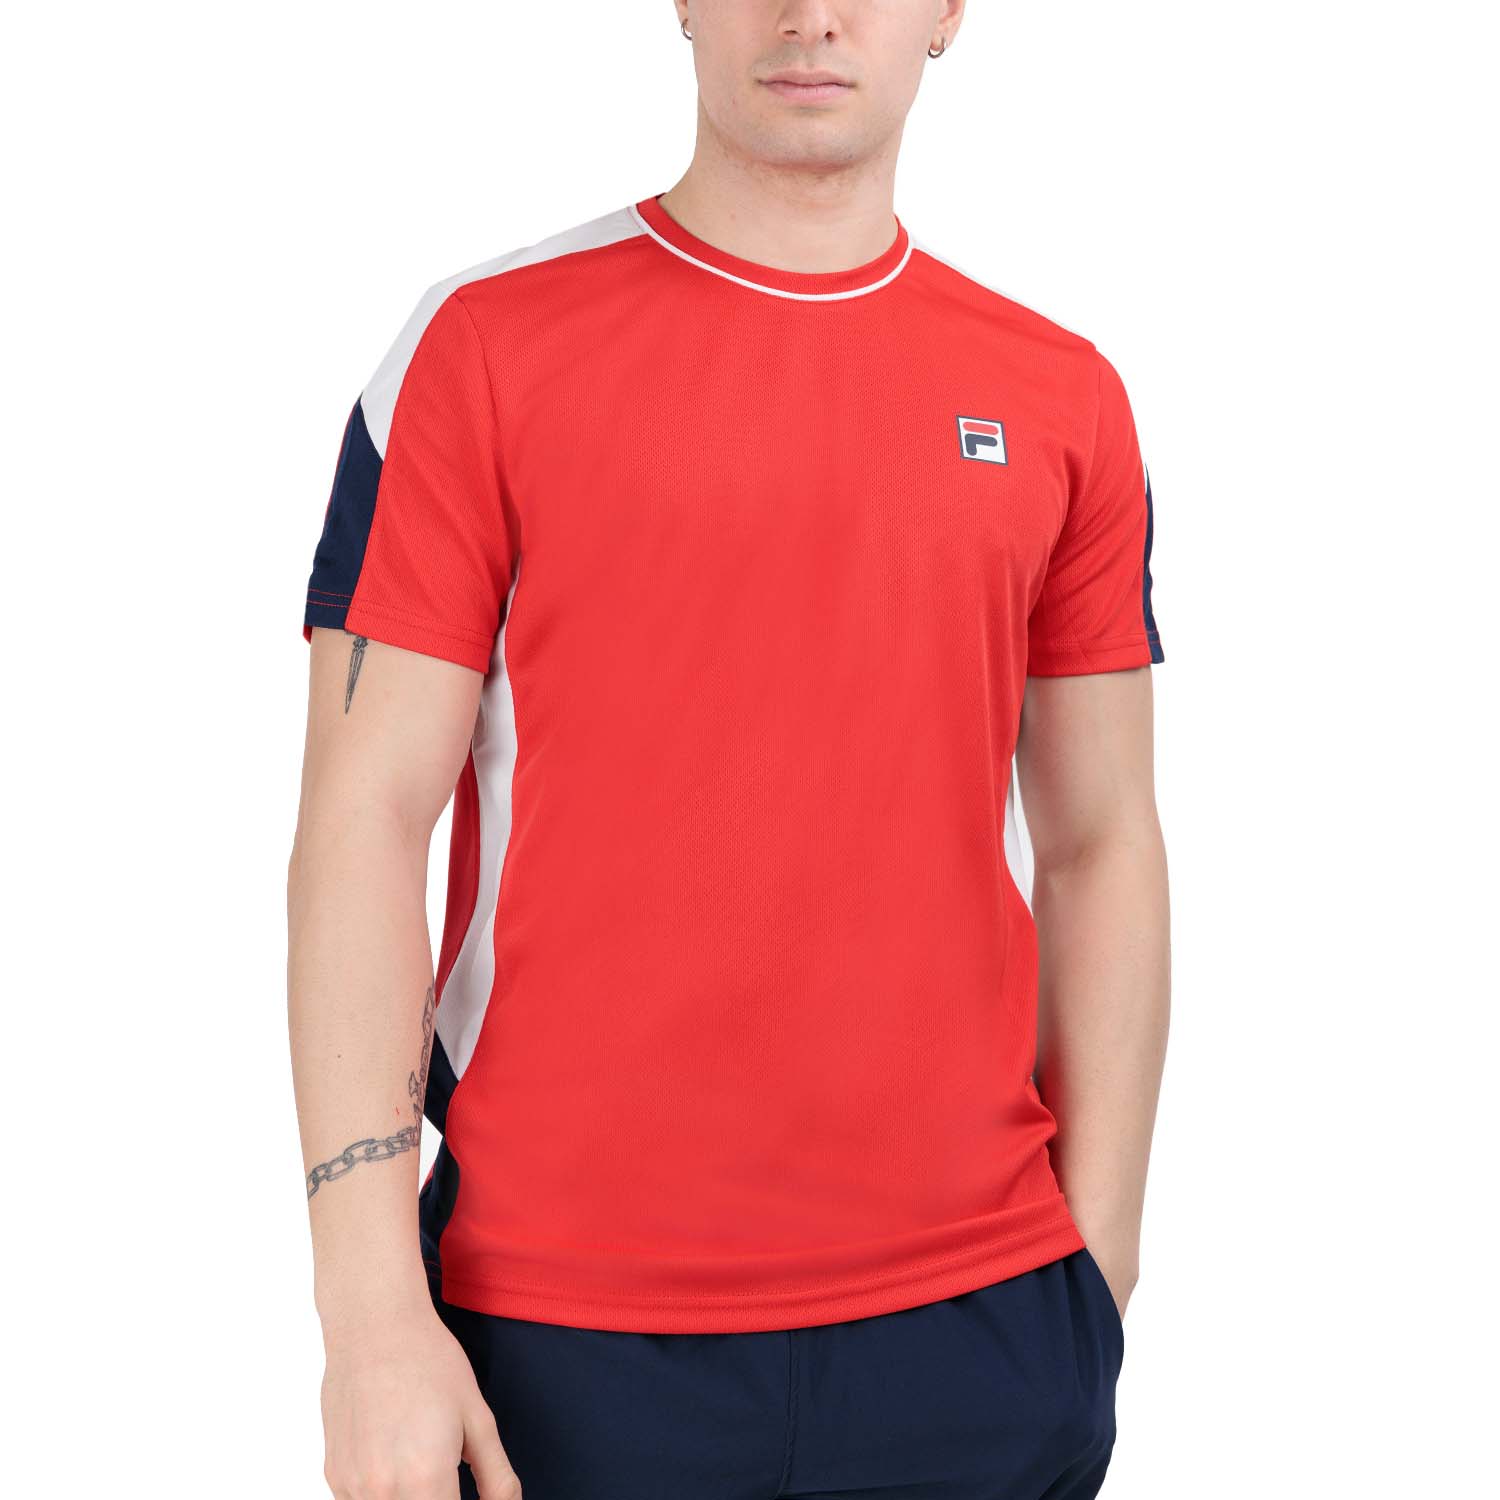 Fila Gabriel Camiseta - Red/White